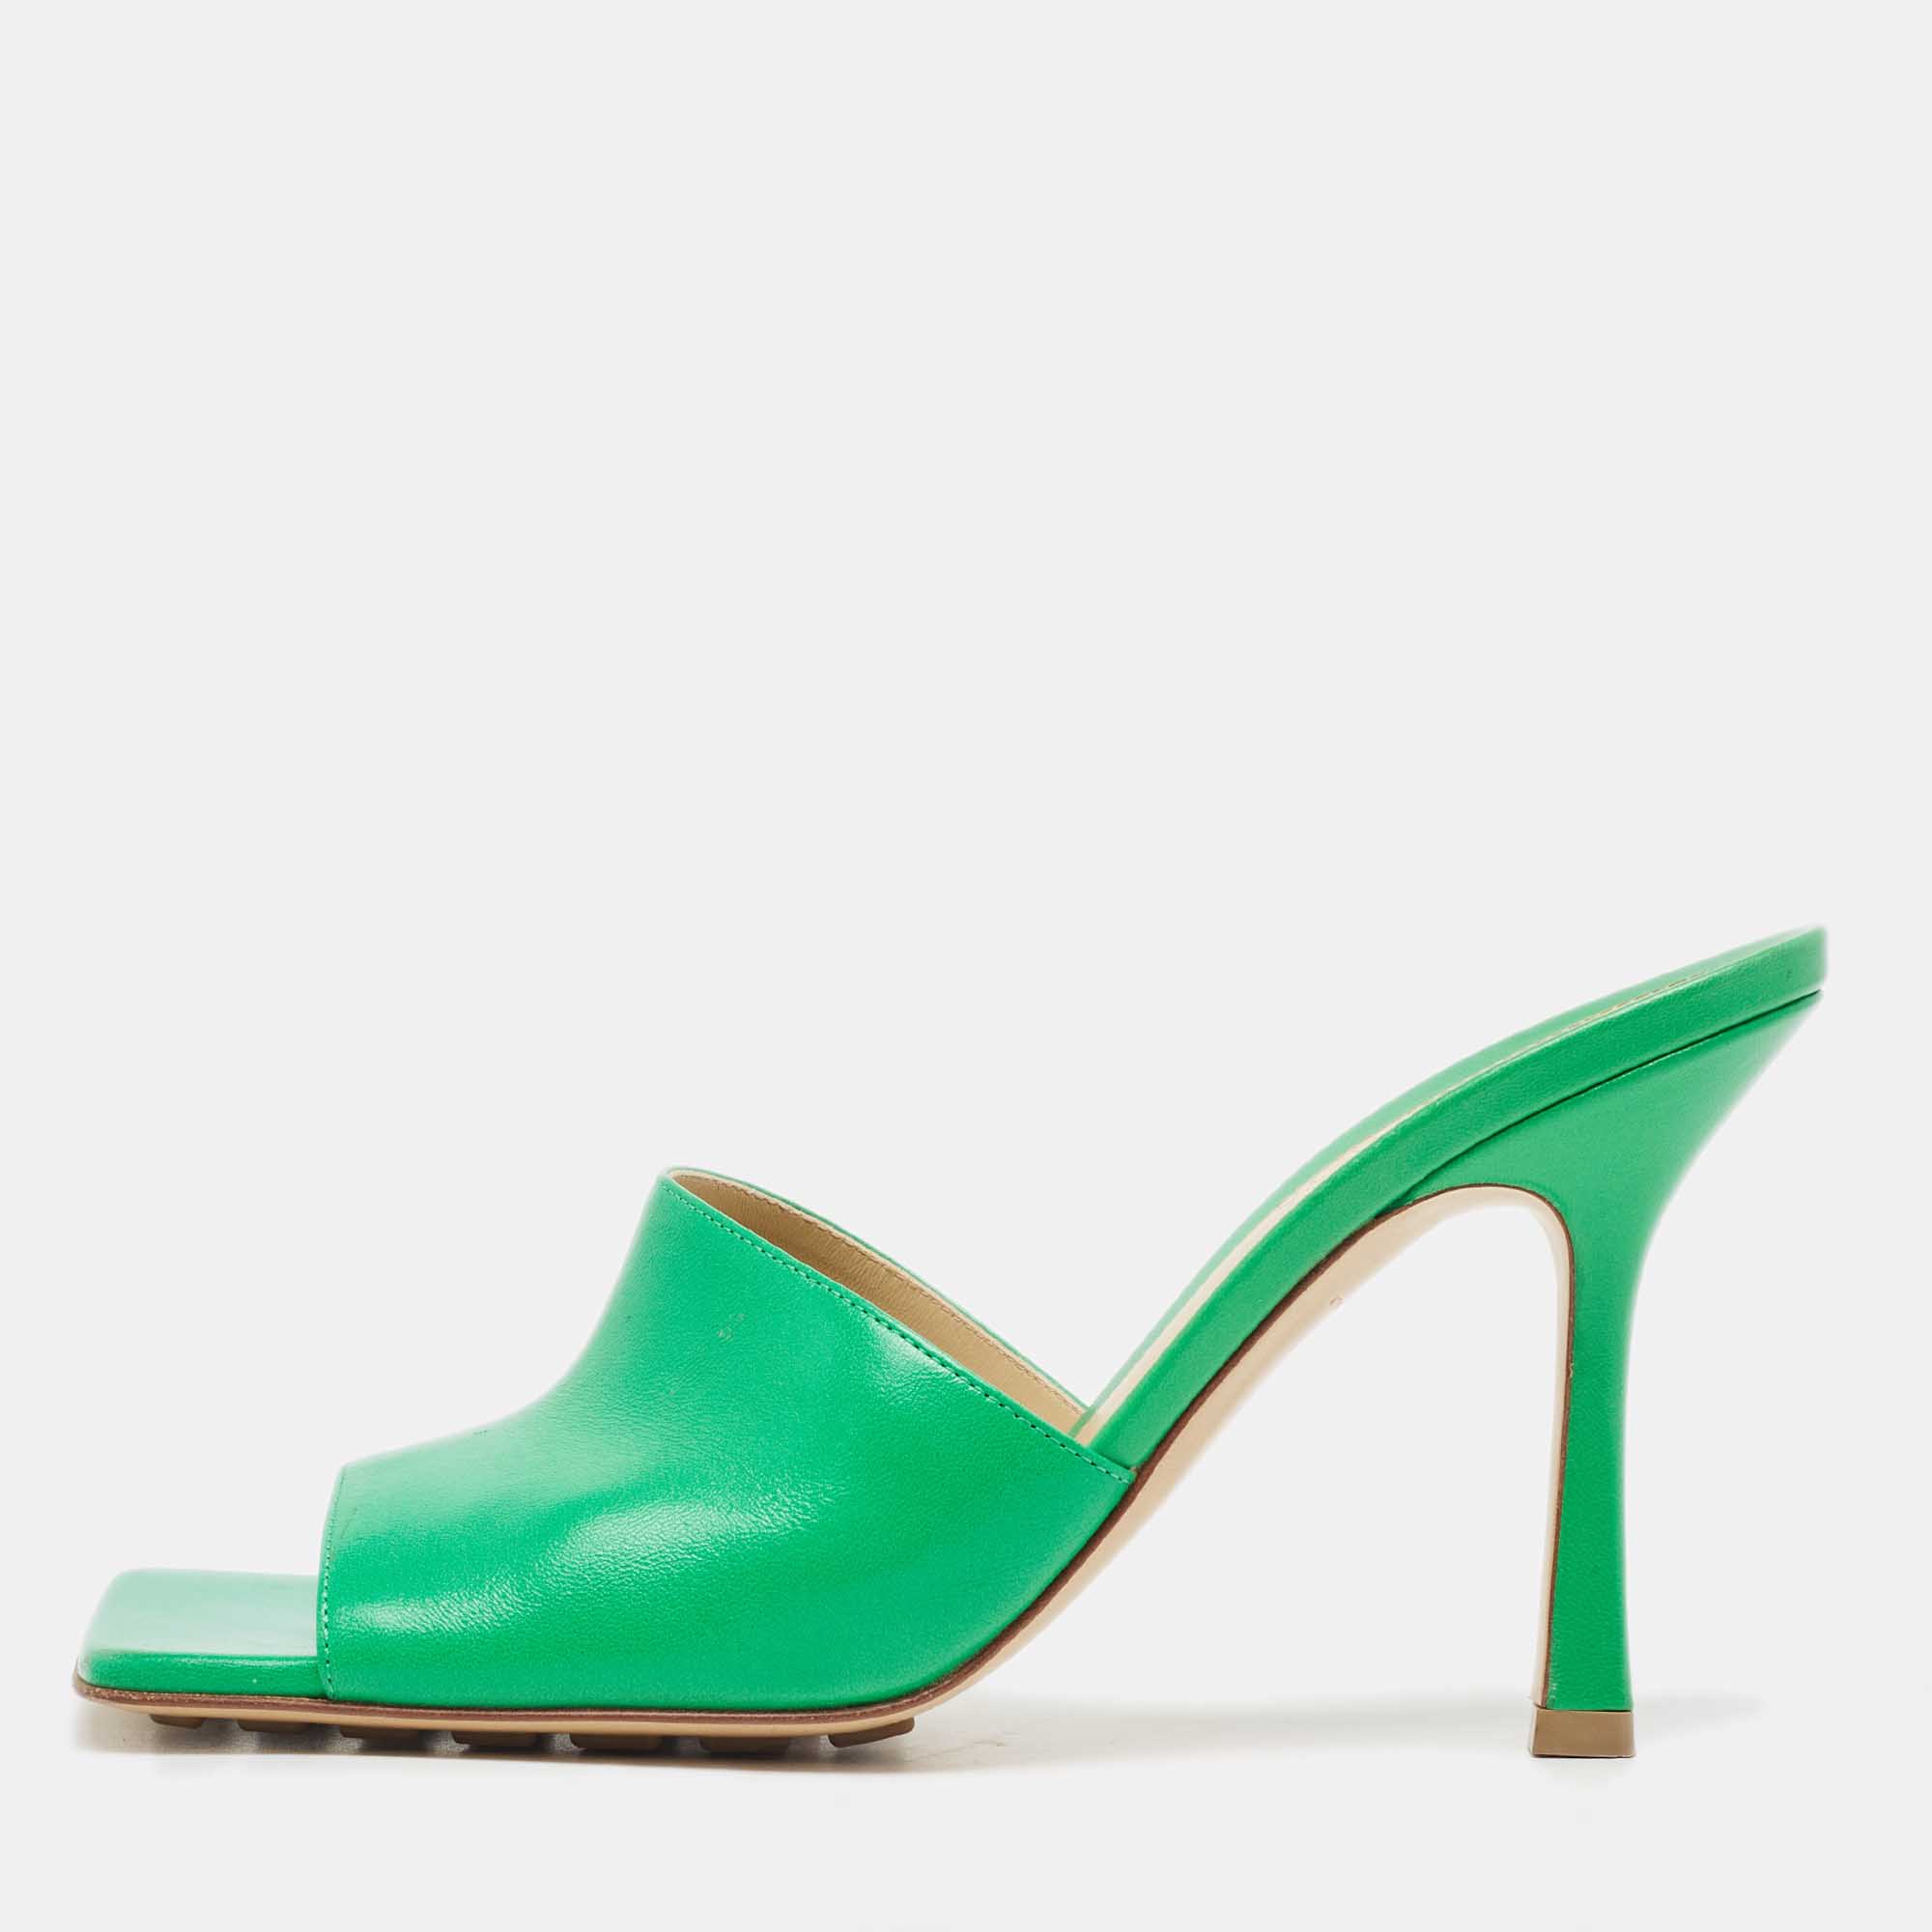 Bottega veneta green leather square open toe slide sandals size 38